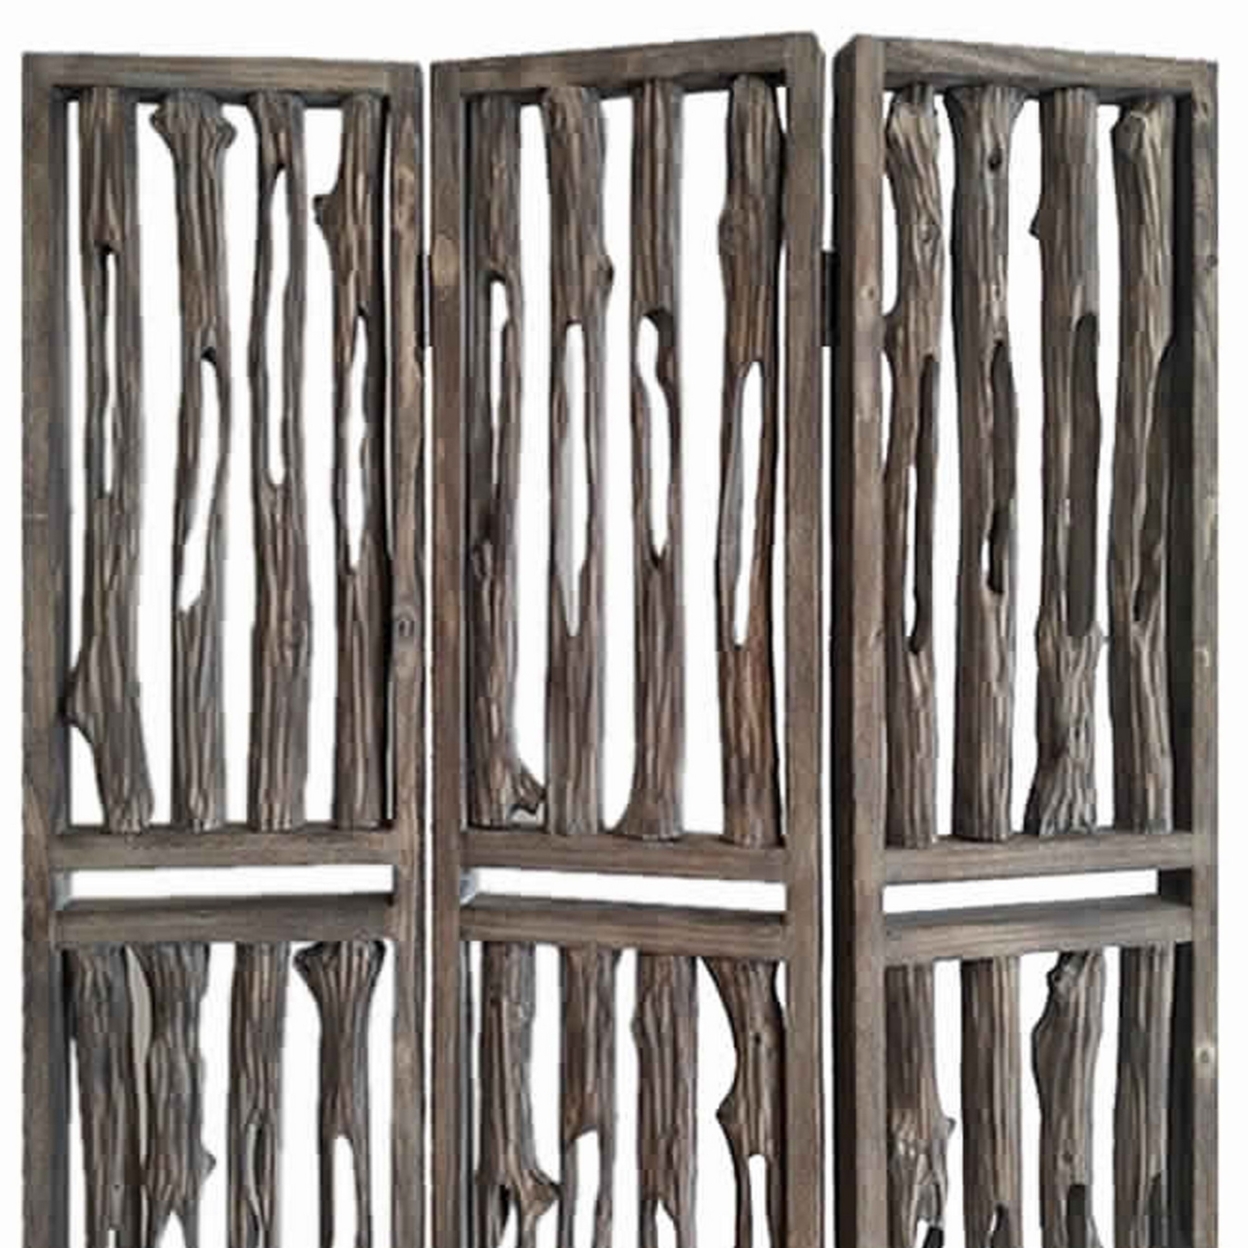 Contemporary 3 Panel Wooden Screen With Log Design, Brown- Saltoro Sherpi